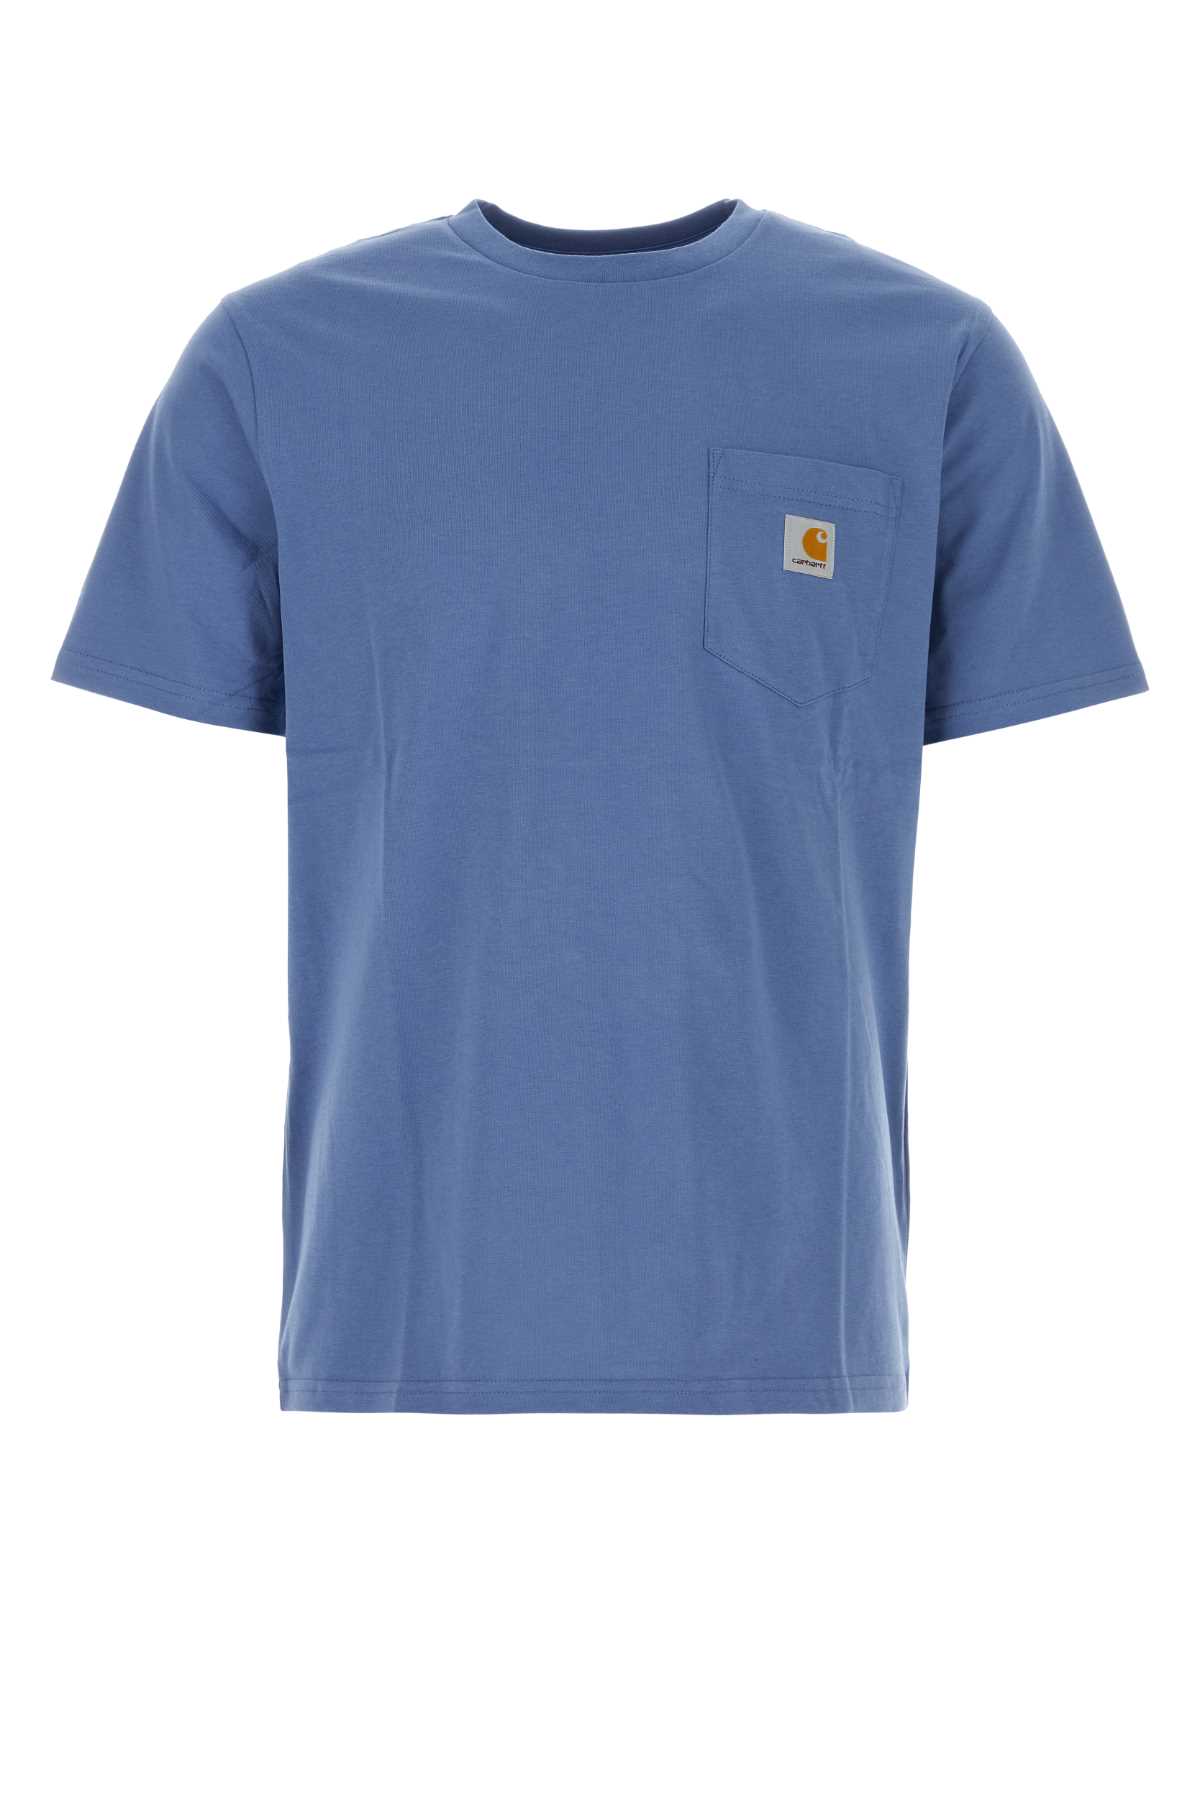 Slate Blue Cotton S/s Pocket T-shirt